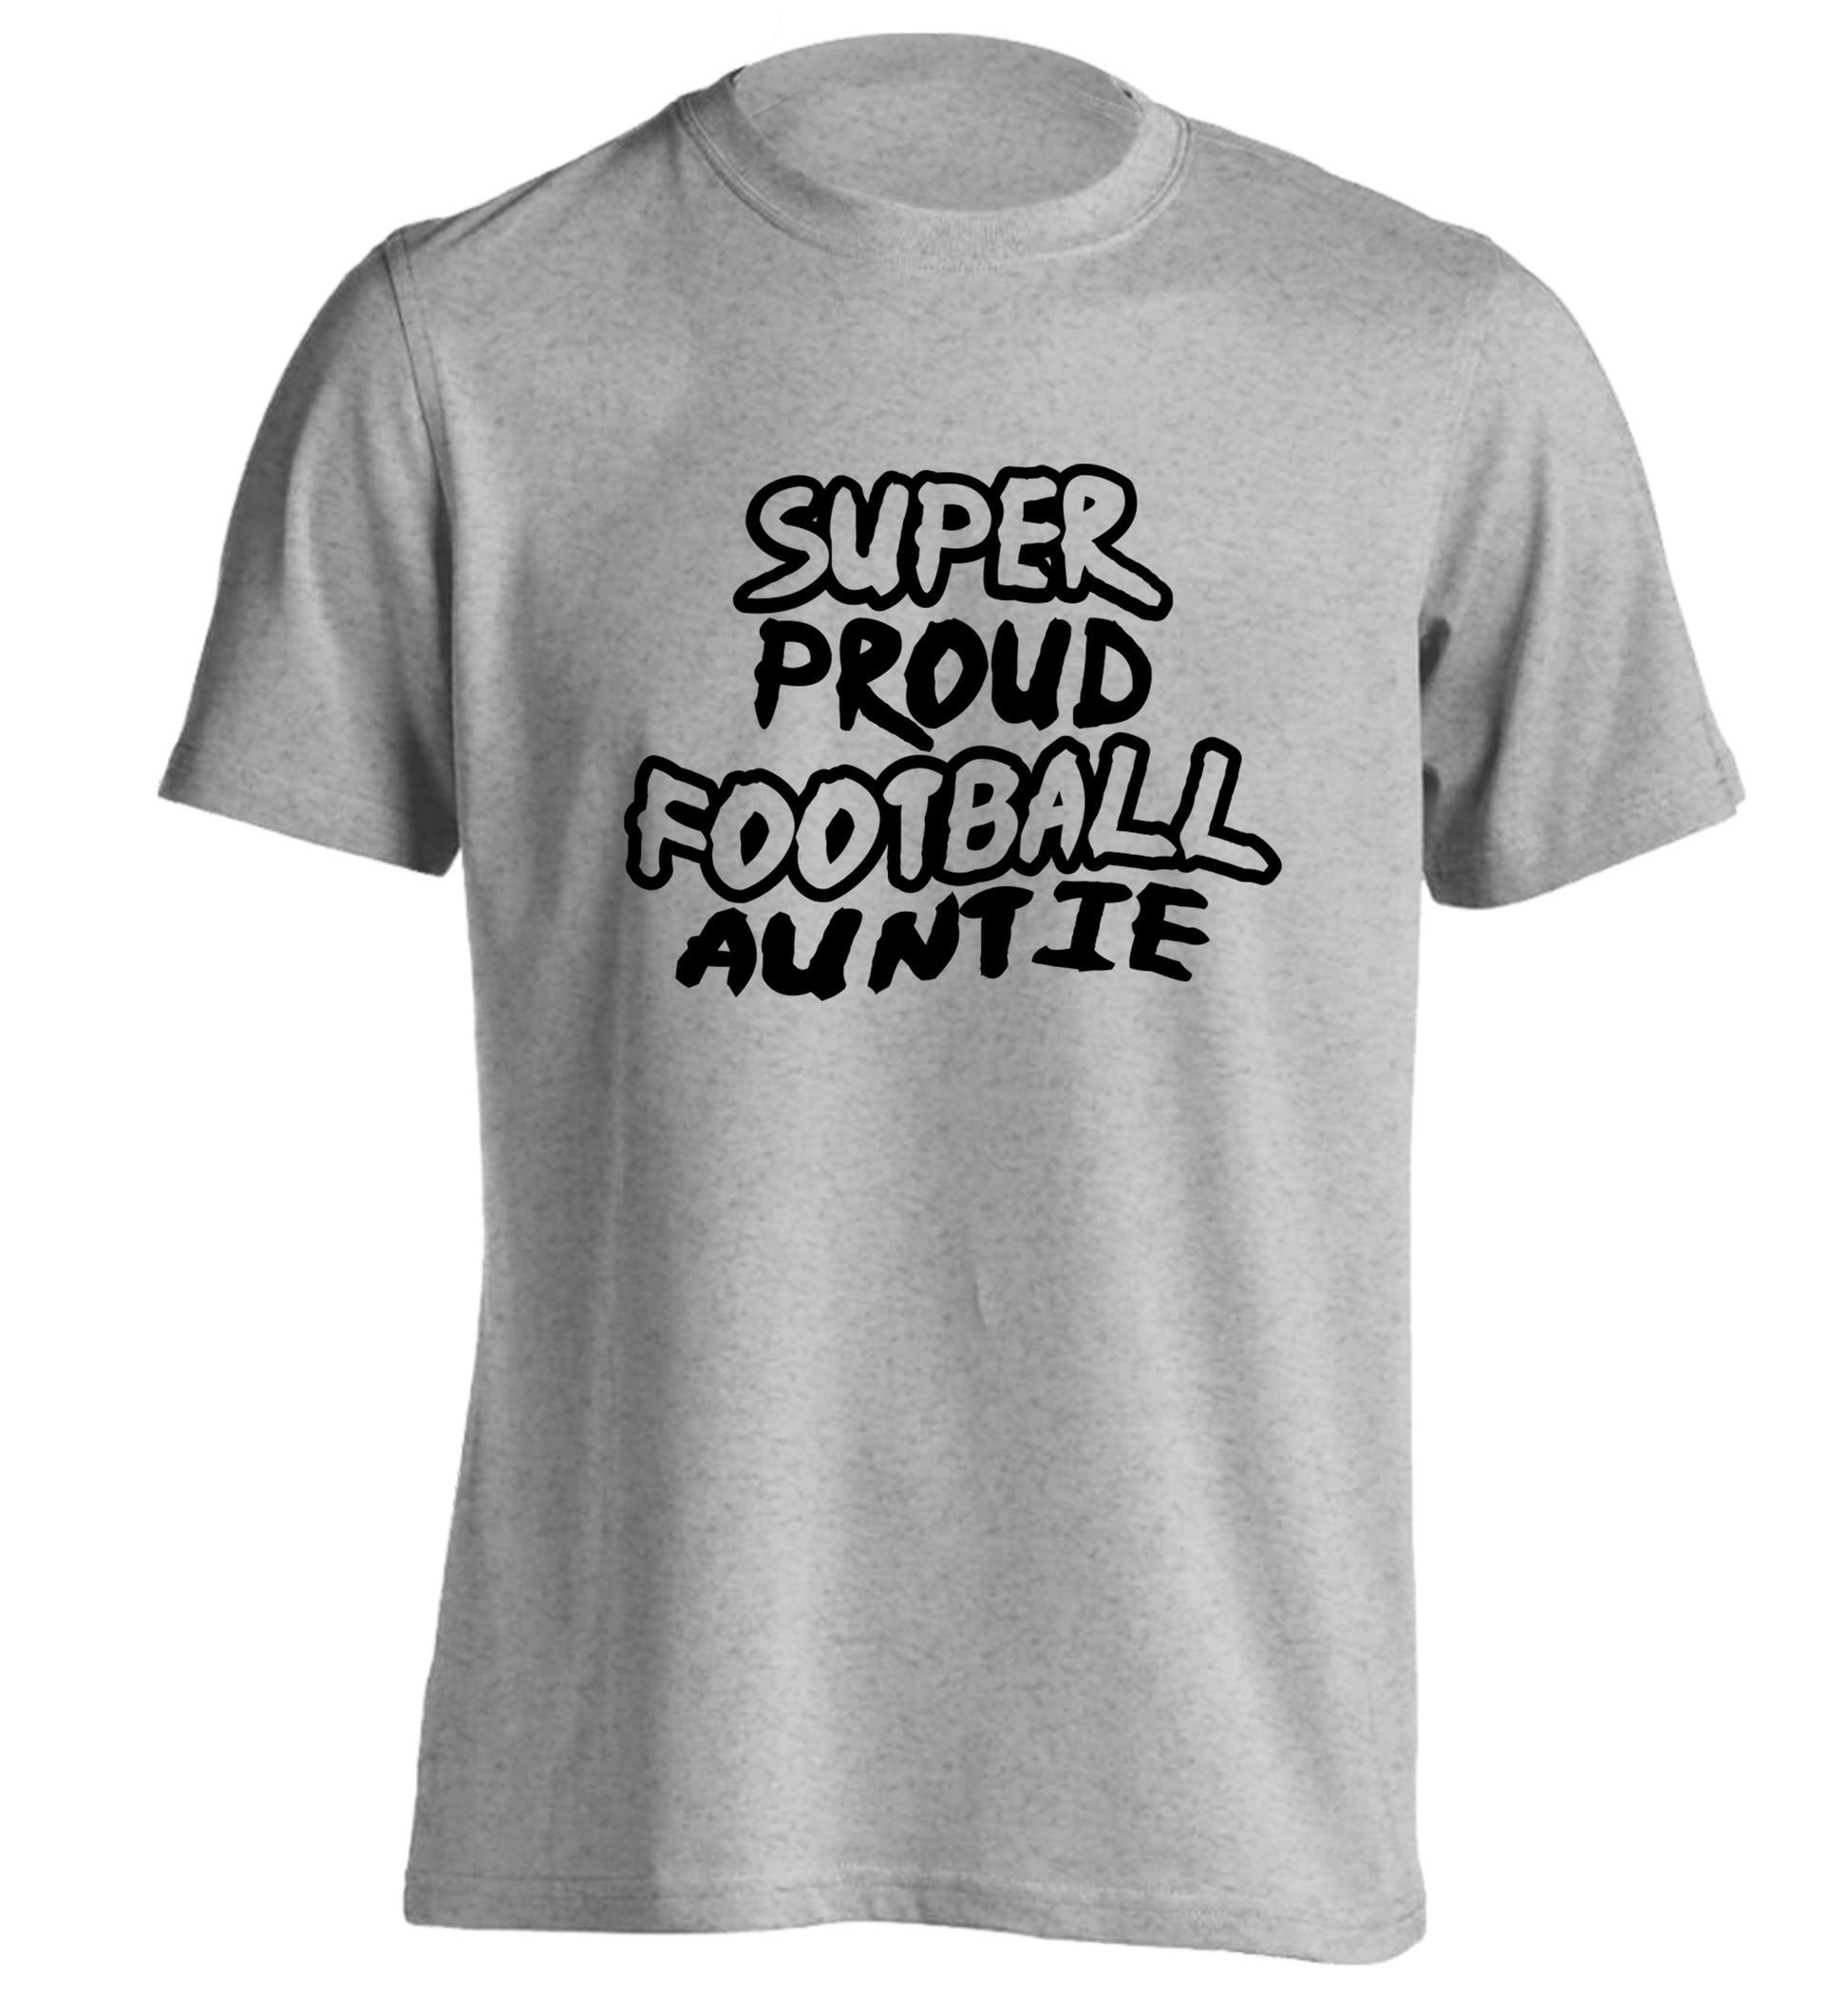 Super proud football auntie adults unisexgrey Tshirt 2XL